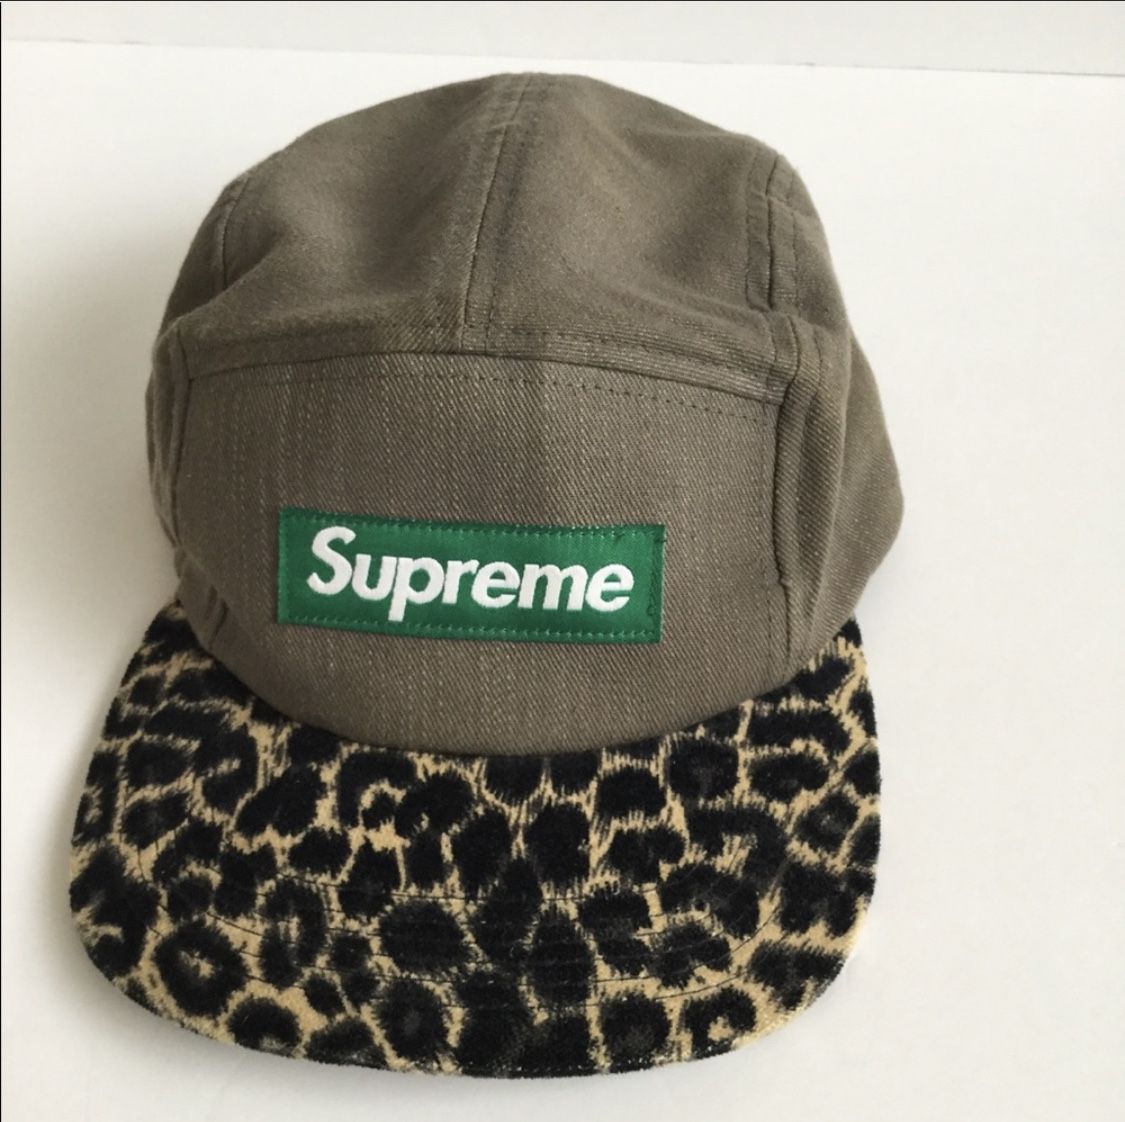 Supreme safari camp hat leopard print